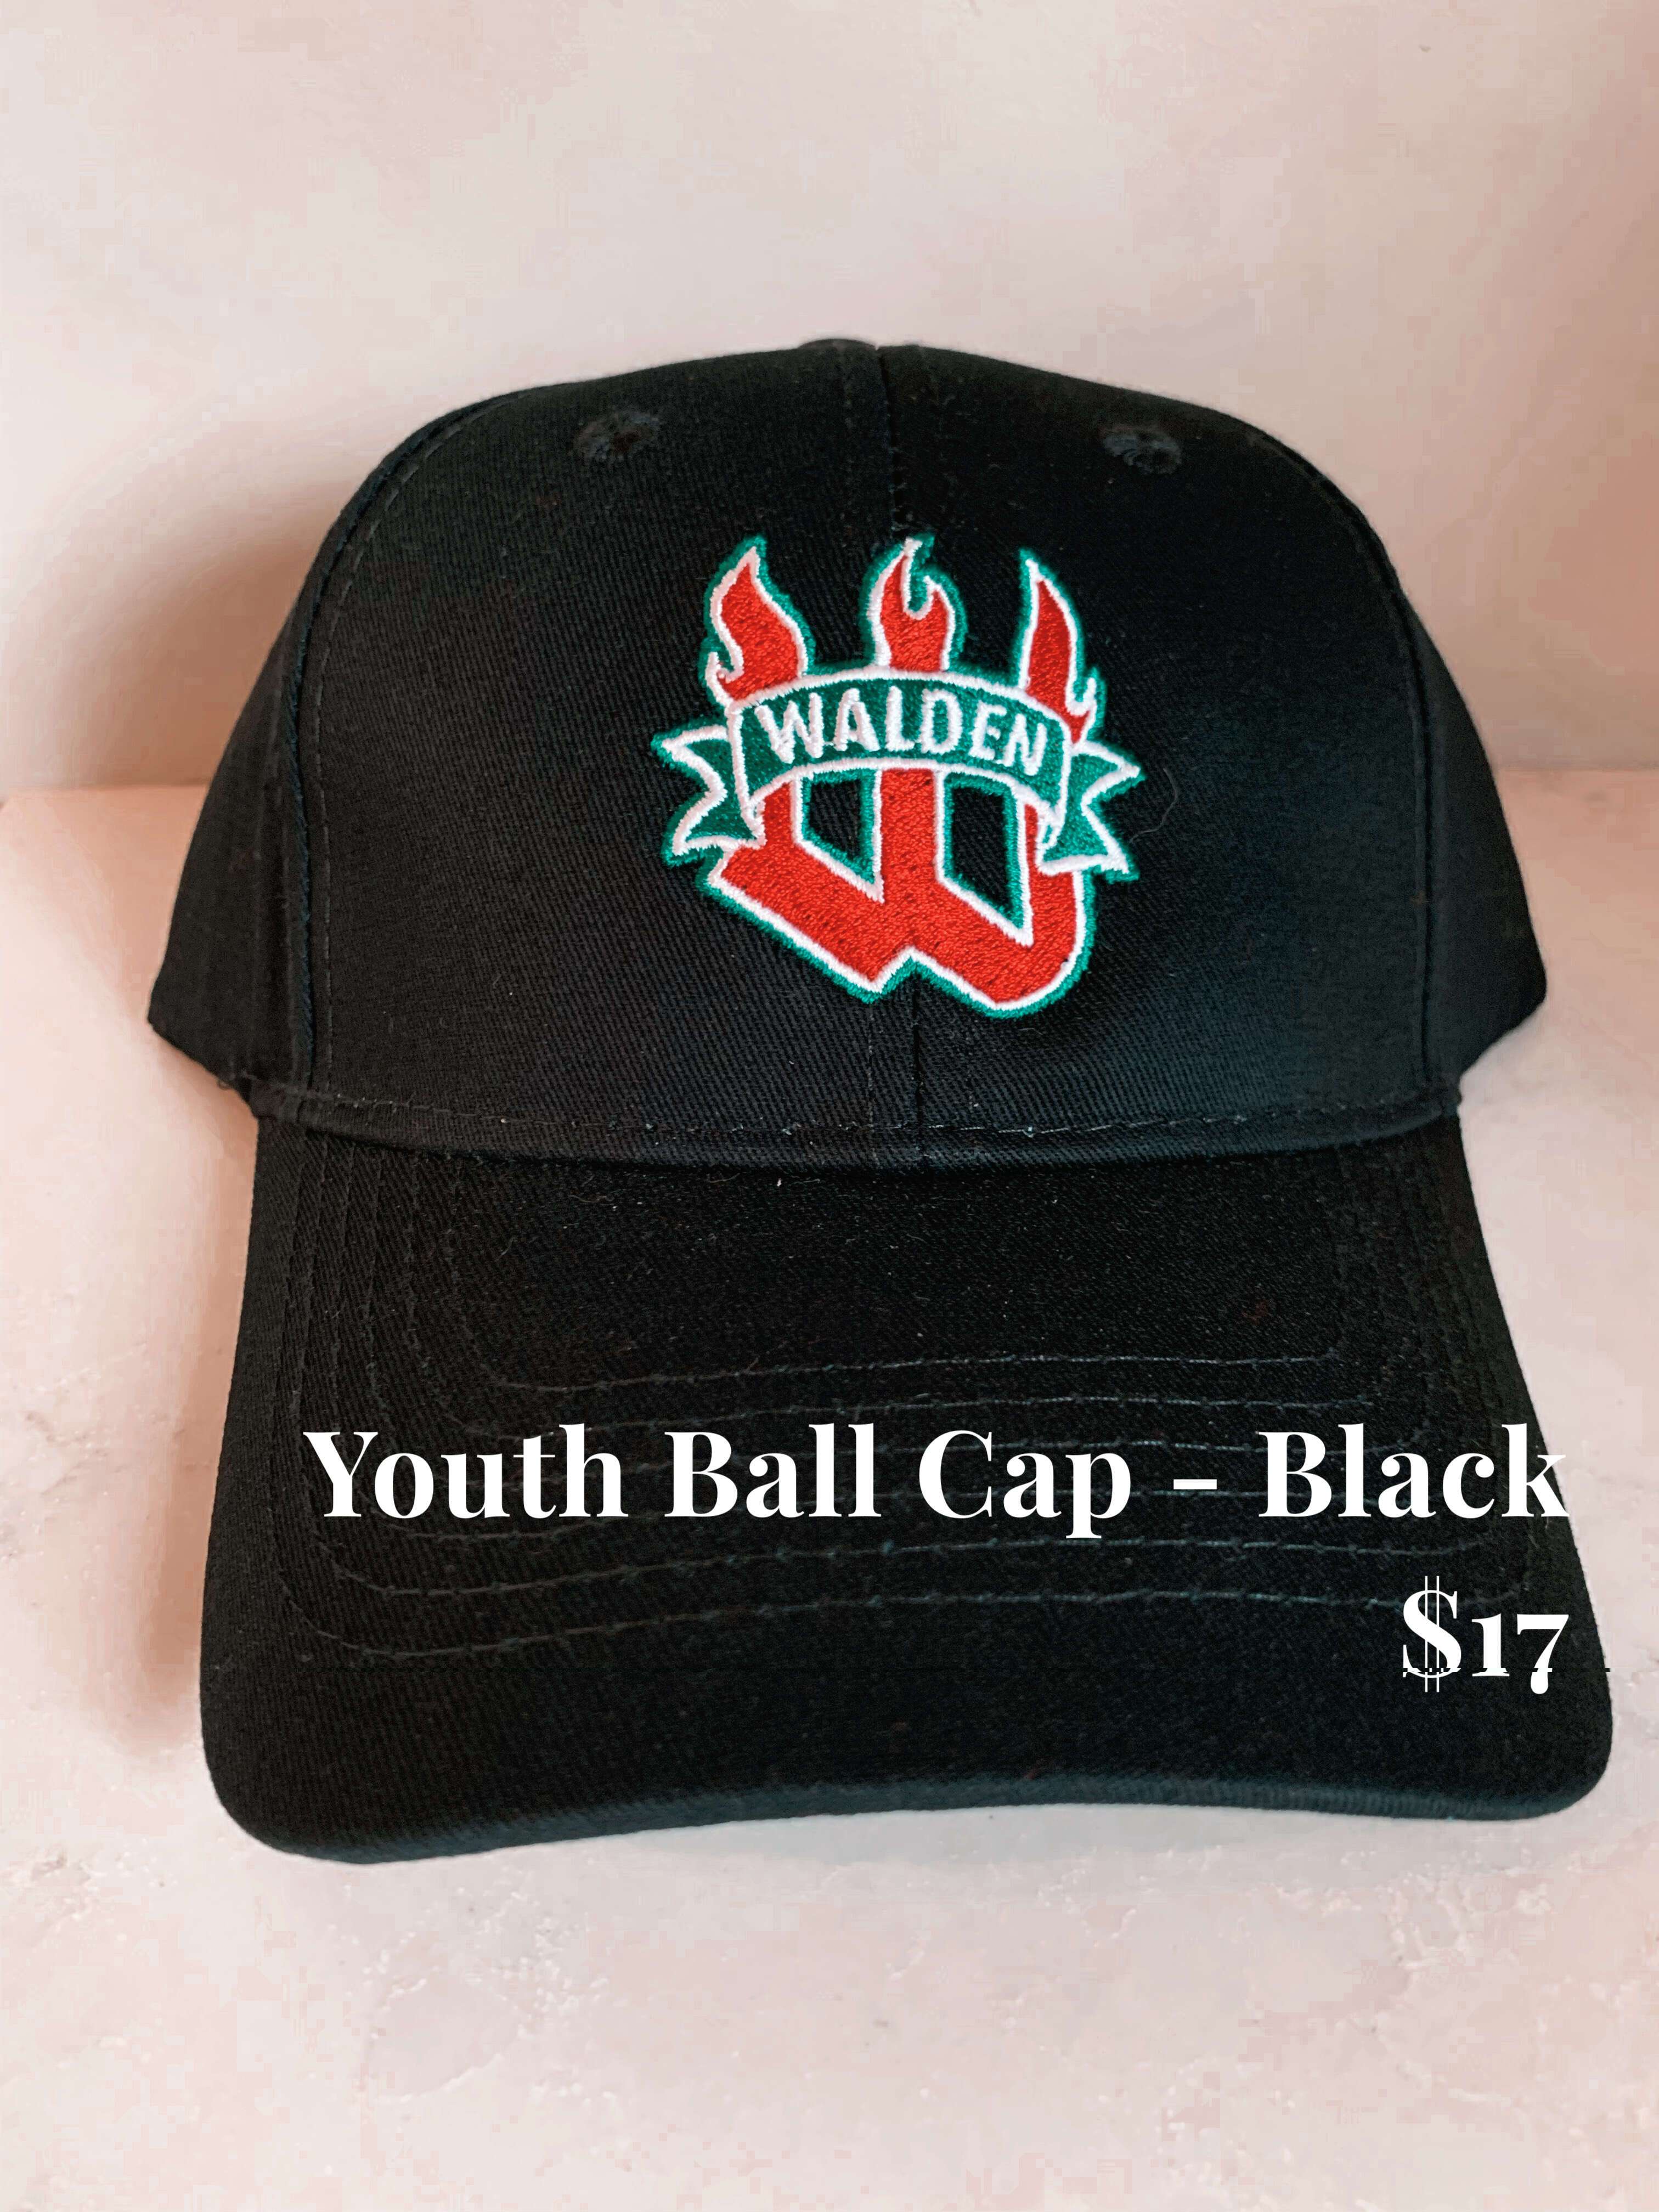 WMHA_Youth_ballcap_black.JPG